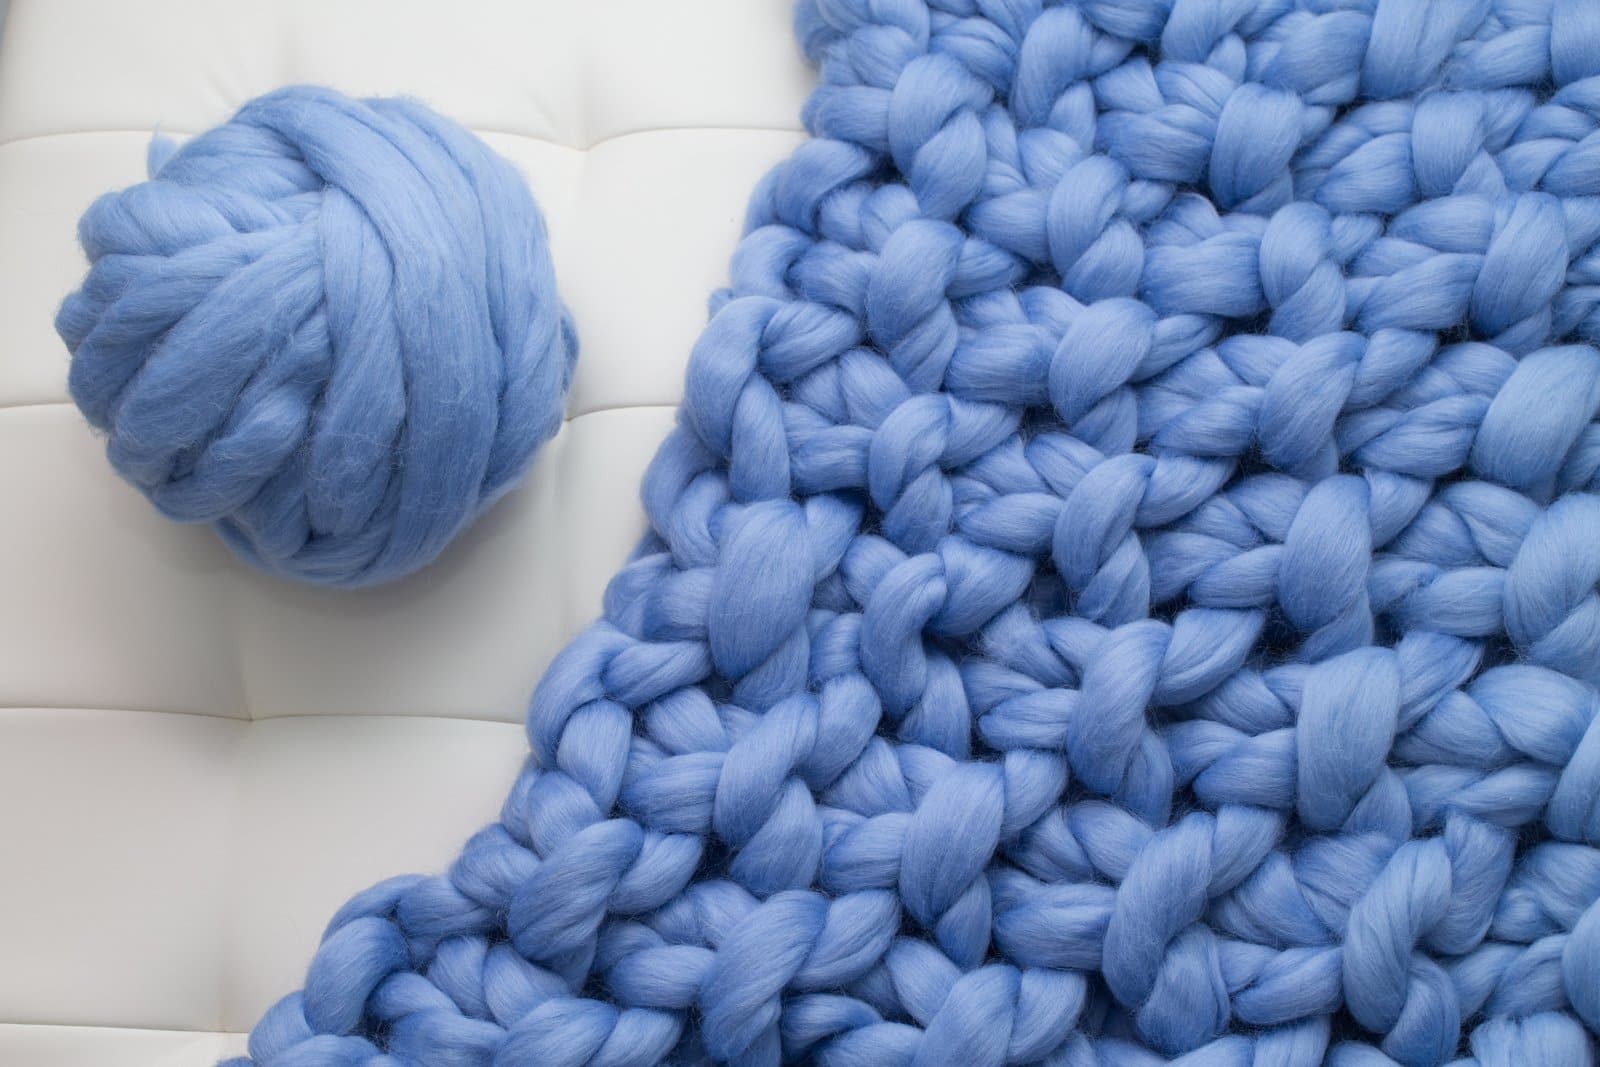  Extra Large Merino Blanket Knit Kit. Includes Super